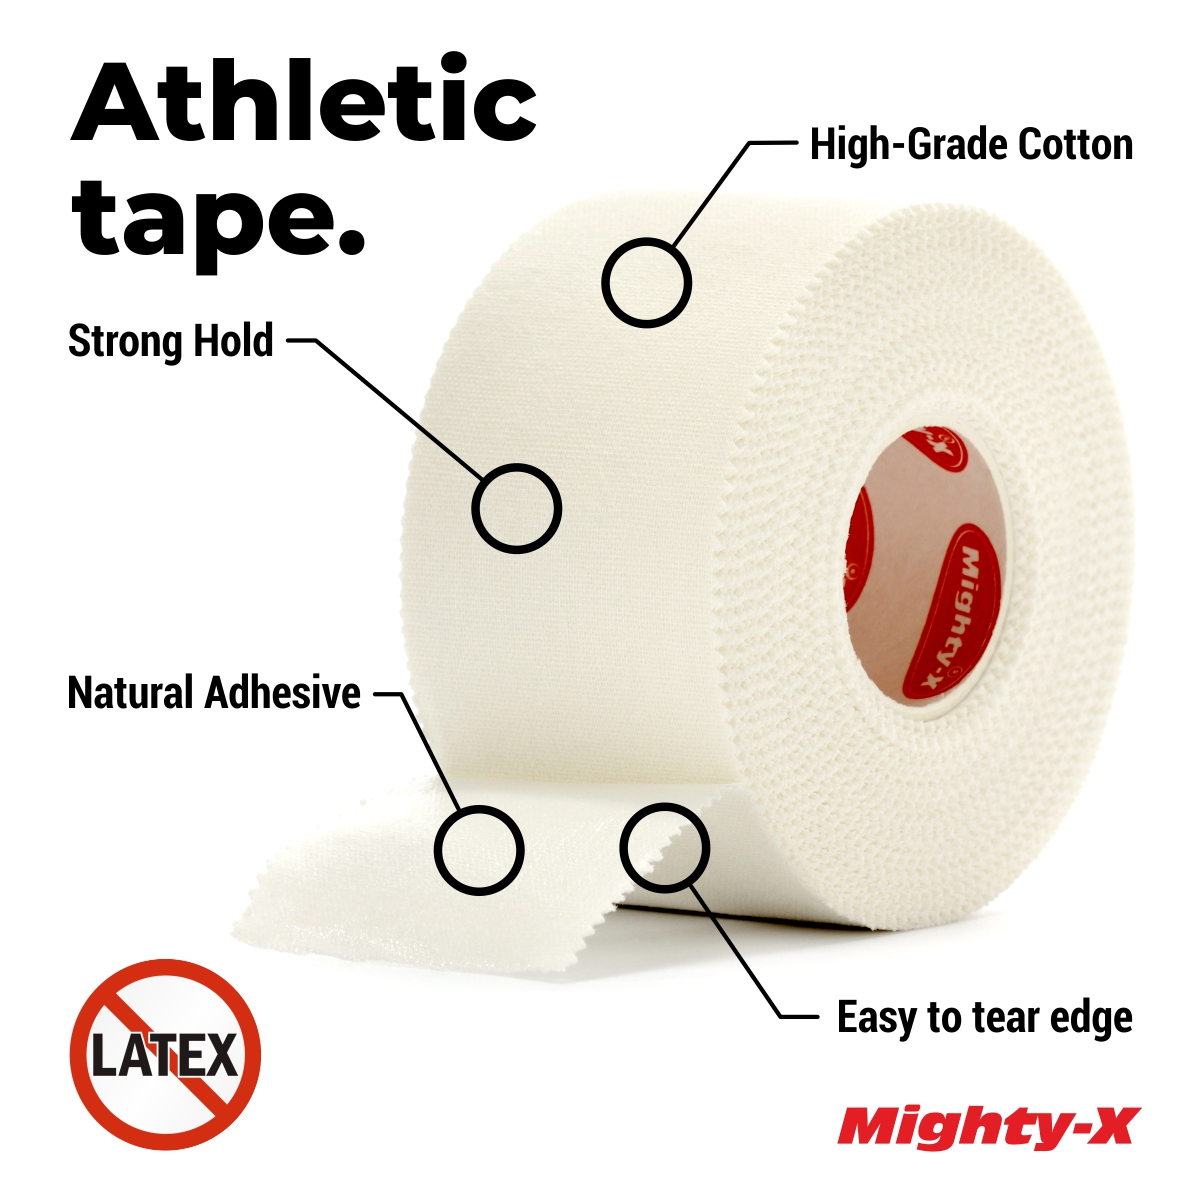 White Athletic Tape